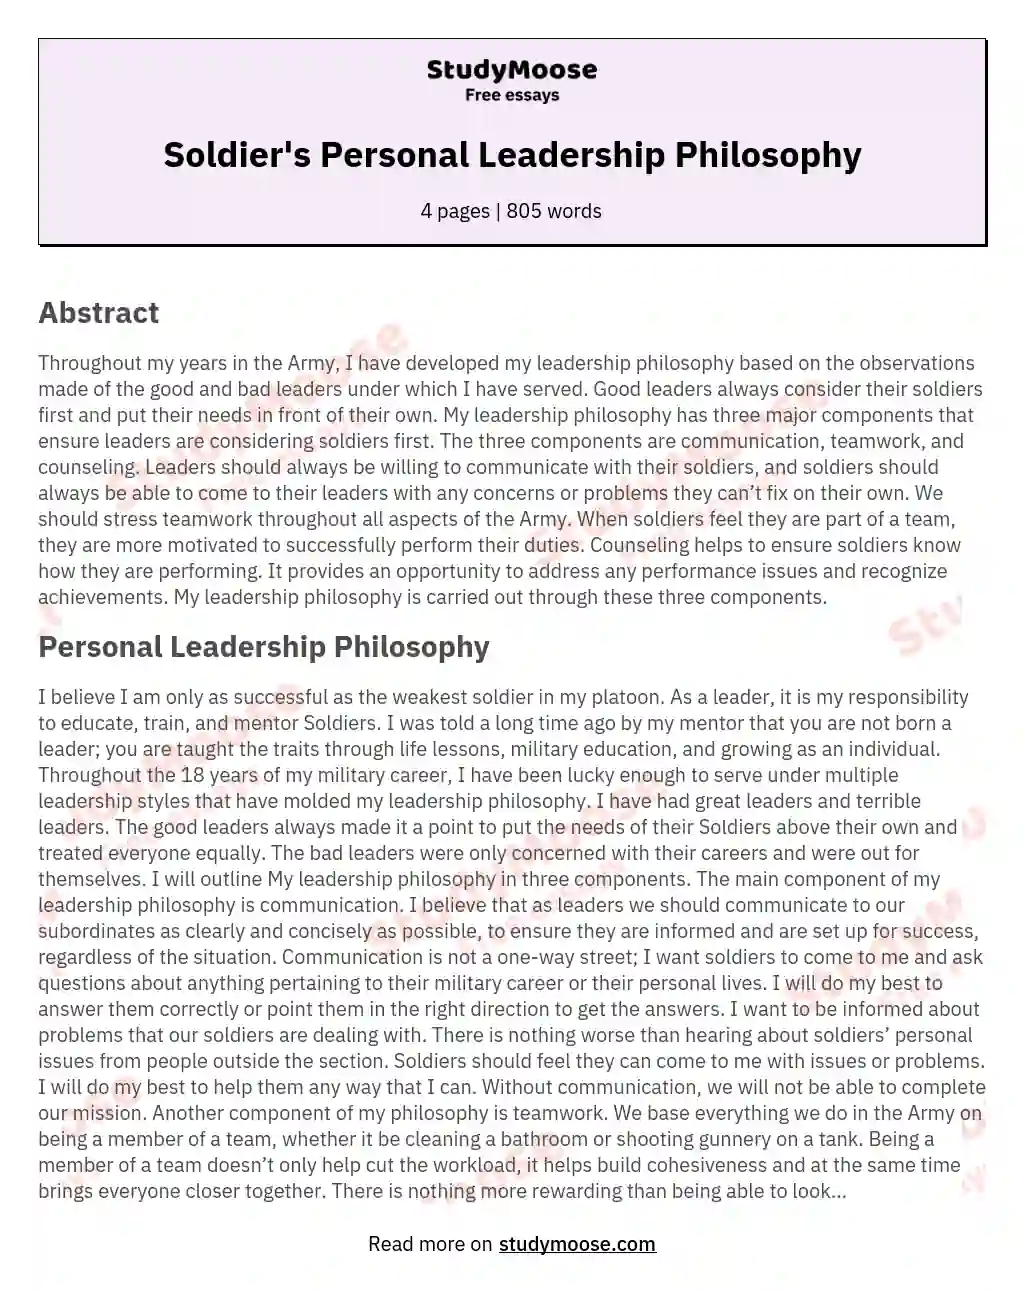 Soldier's Personal Leadership Philosophy essay